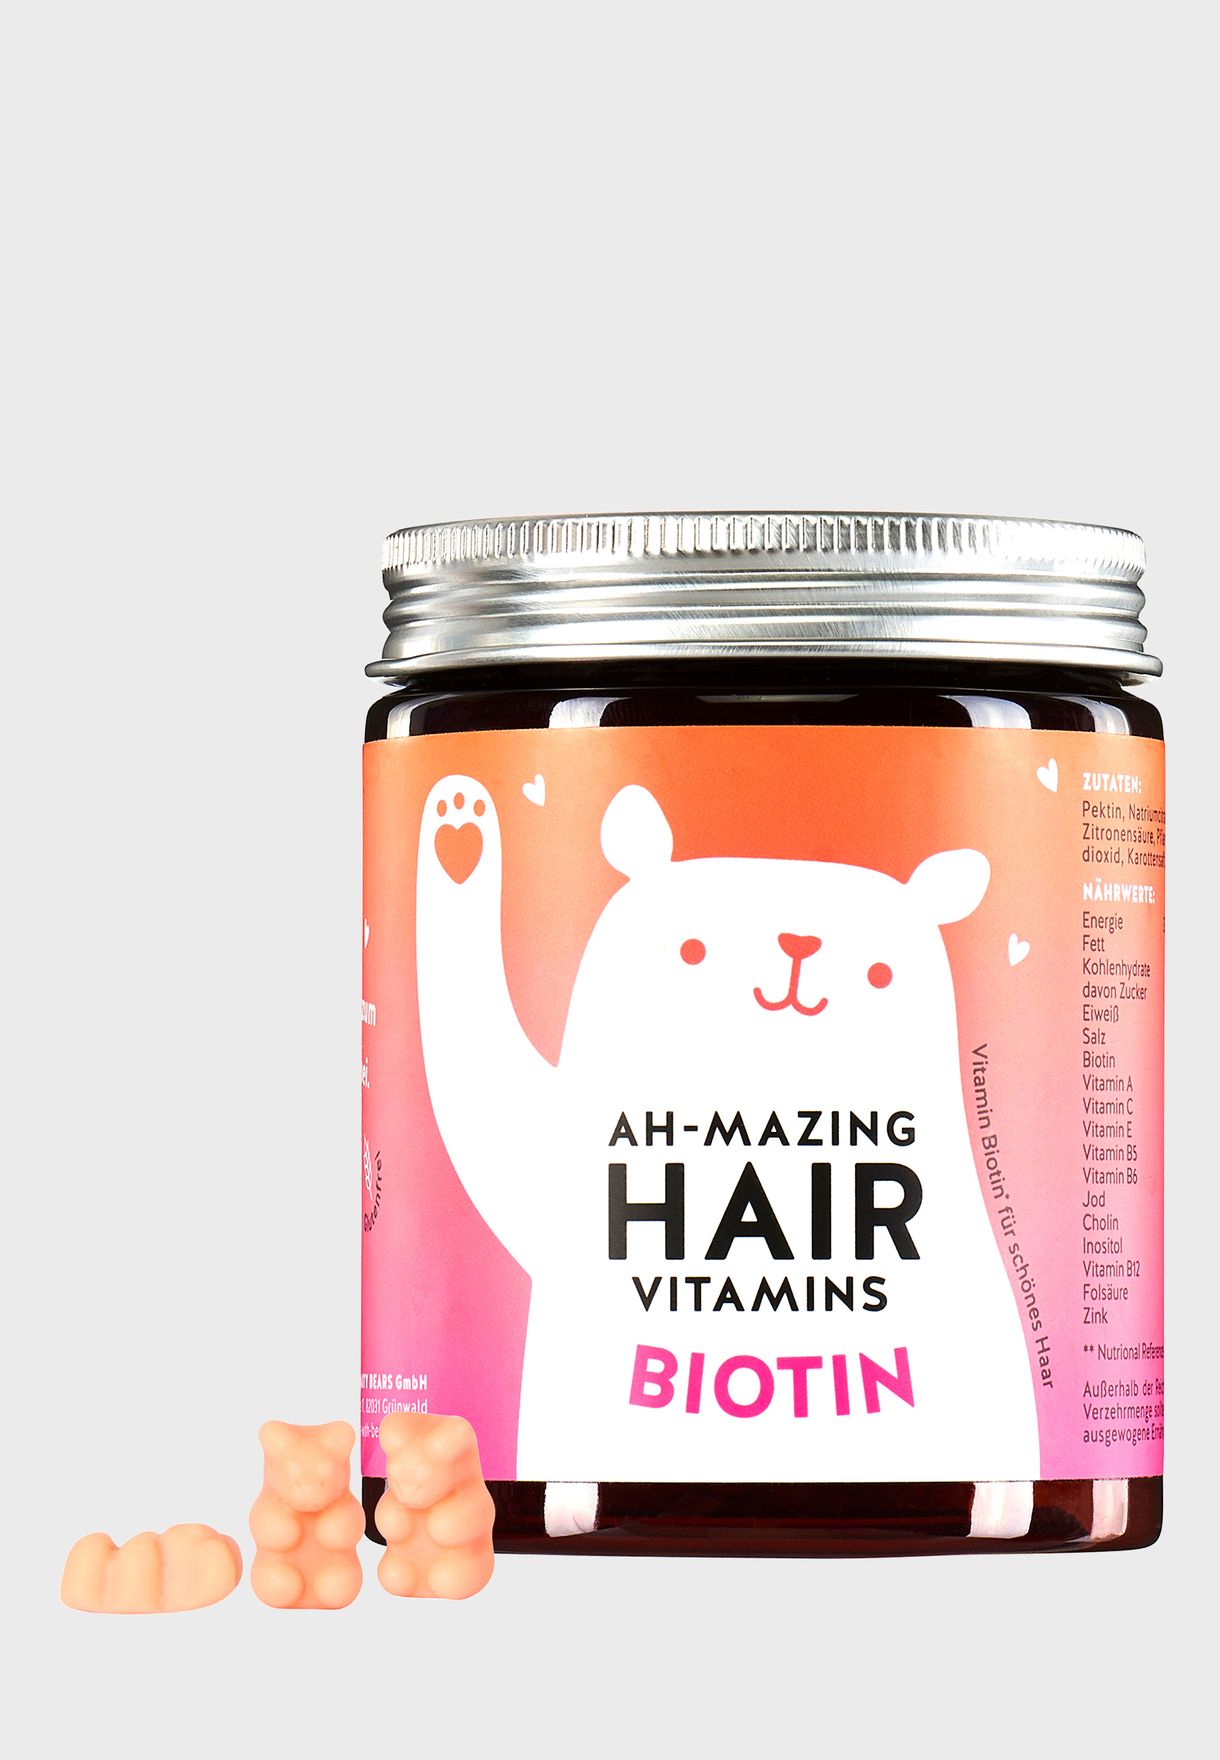 Buy clear Ah-Mazing Hair Vitamins Biotin for Women in Dubai, Abu Dhabi